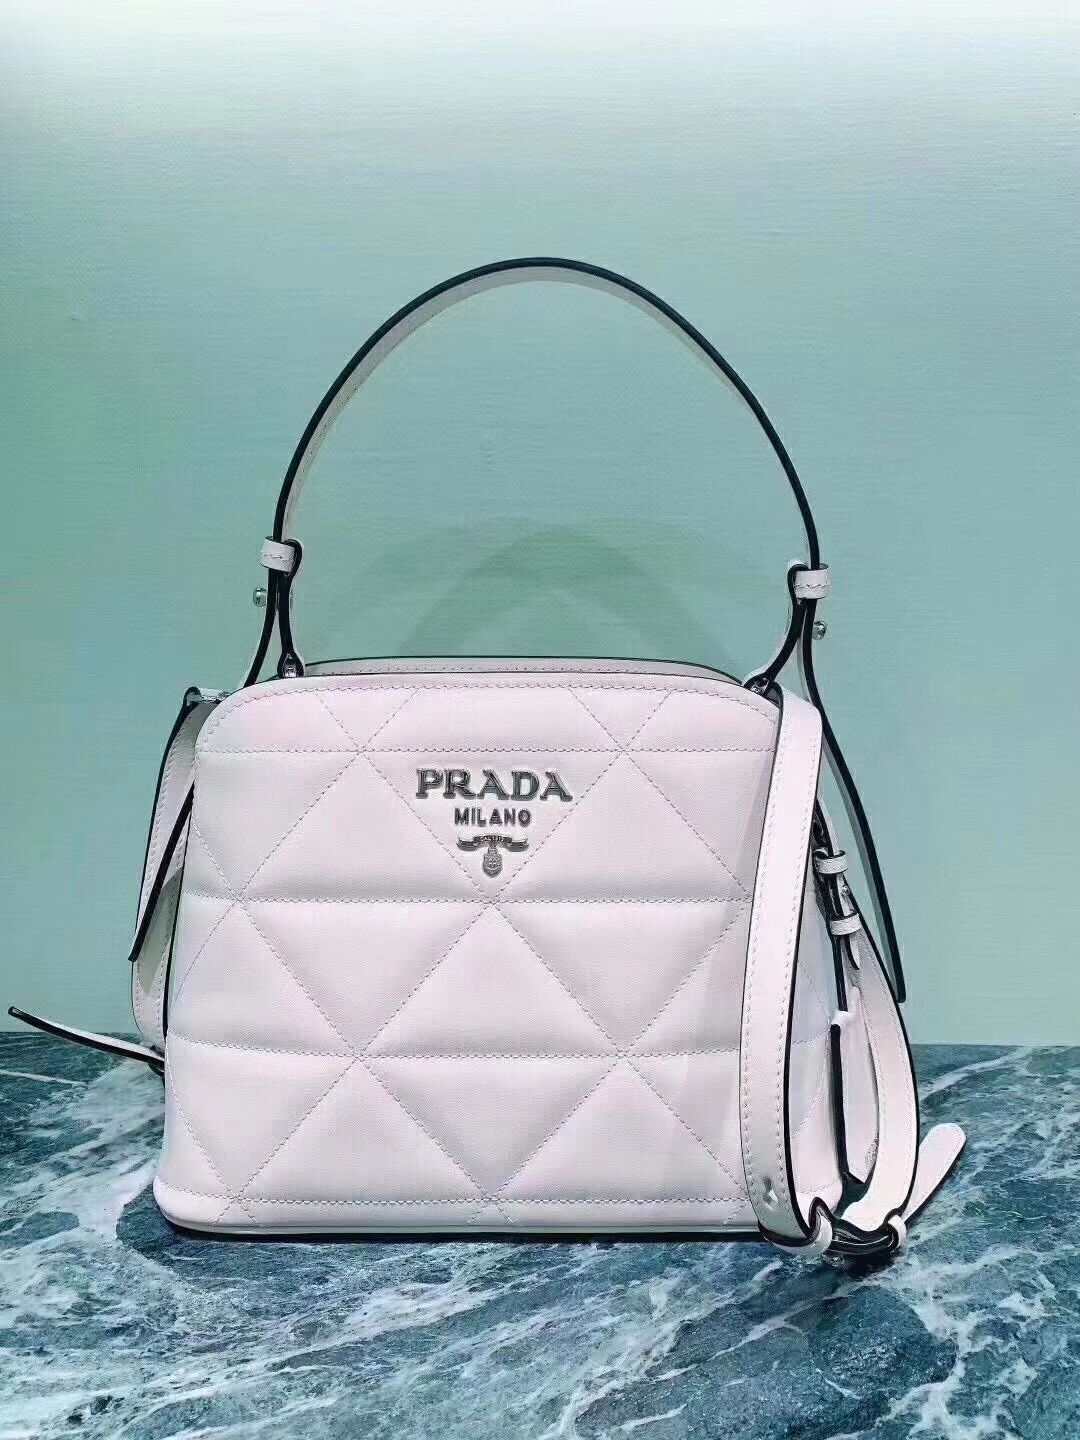 Prada Spectrum small leather bag 1BA311 white